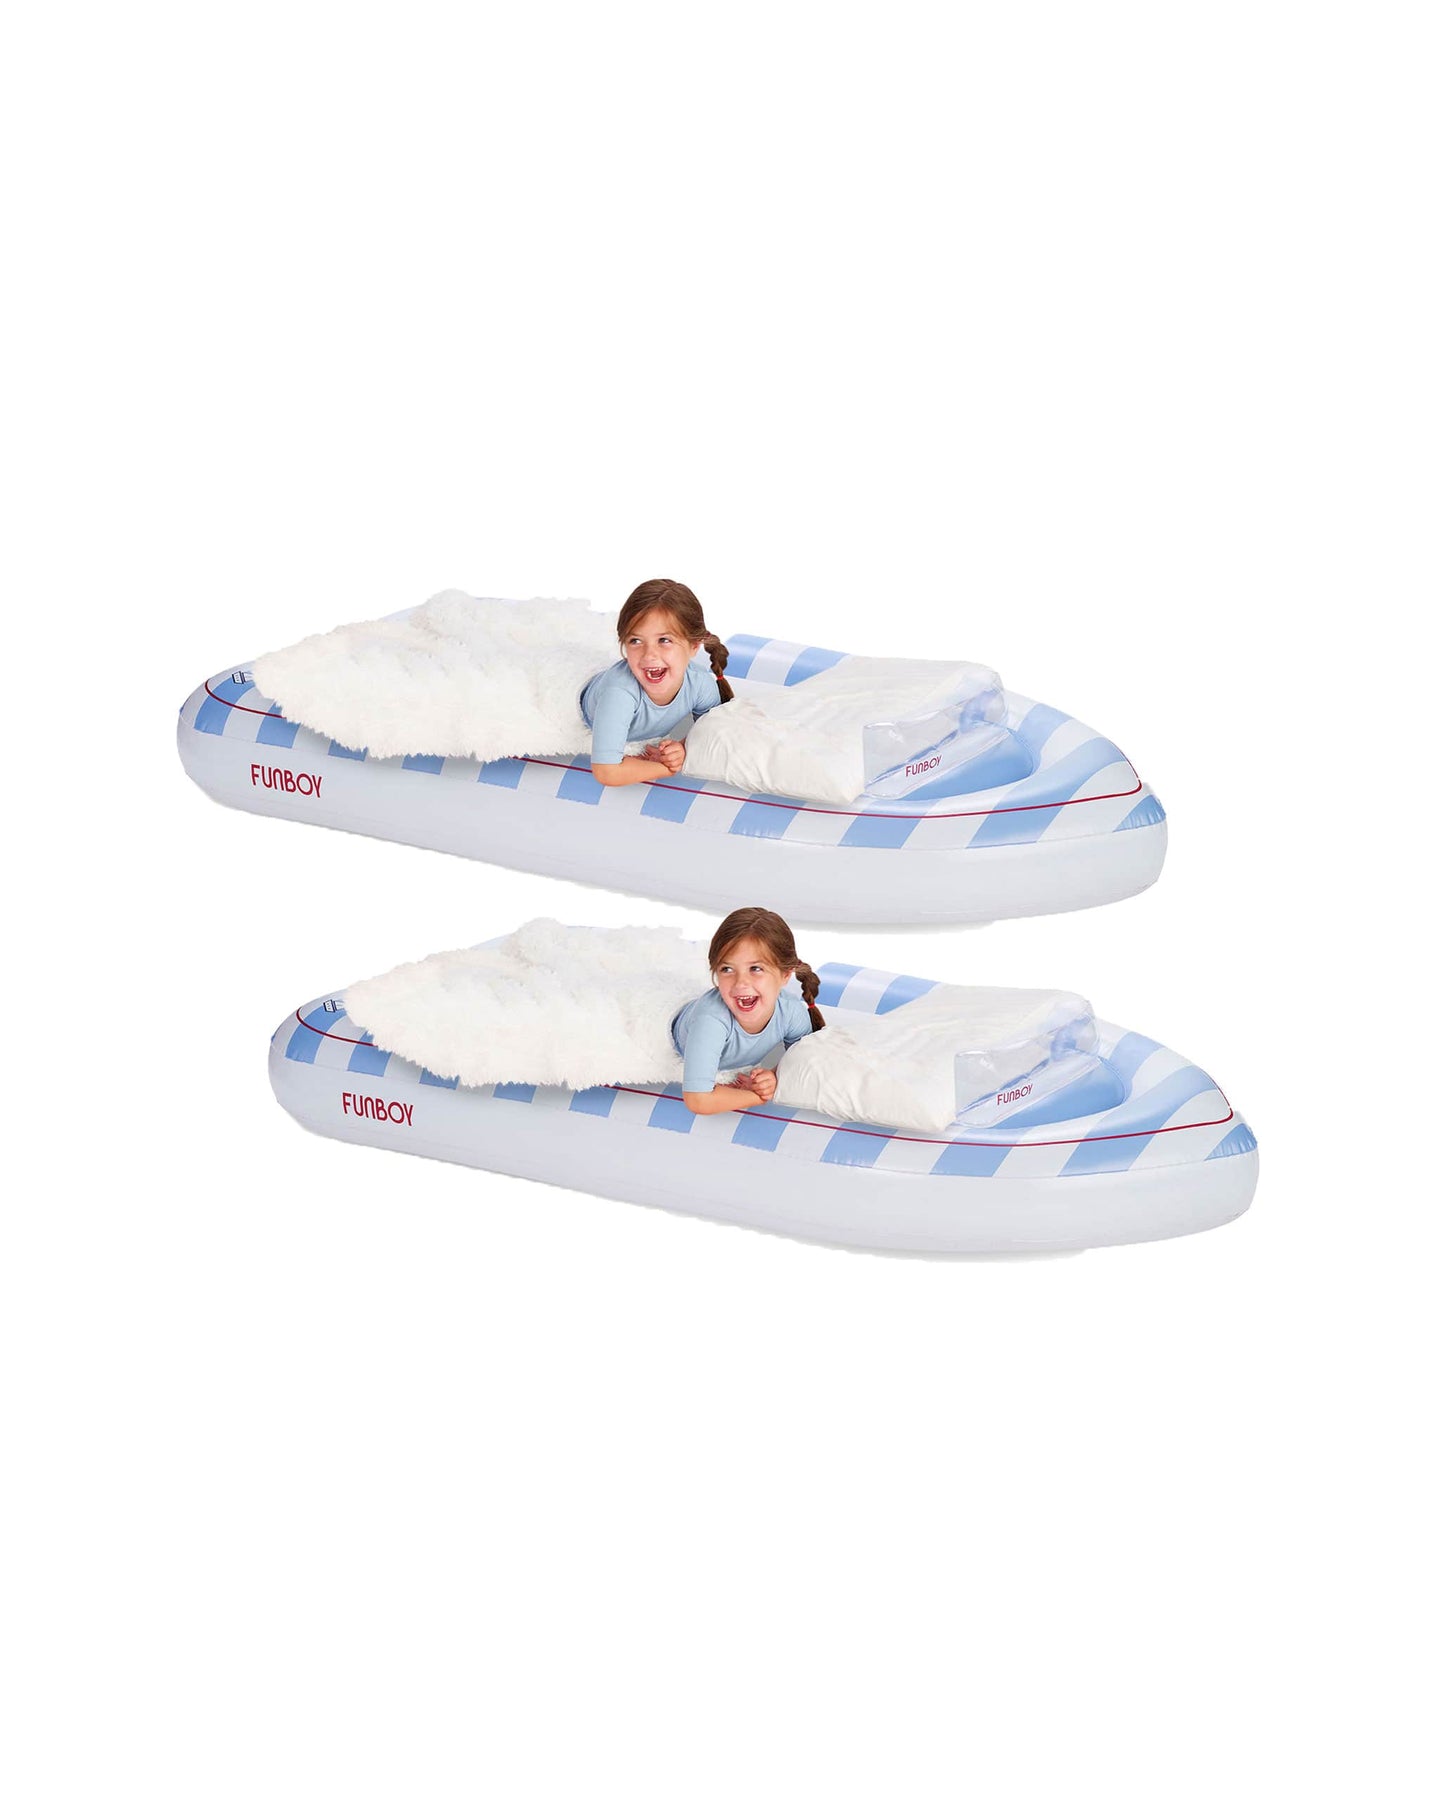 Kids Sleepover Bed Air Mattress - Speed Boat